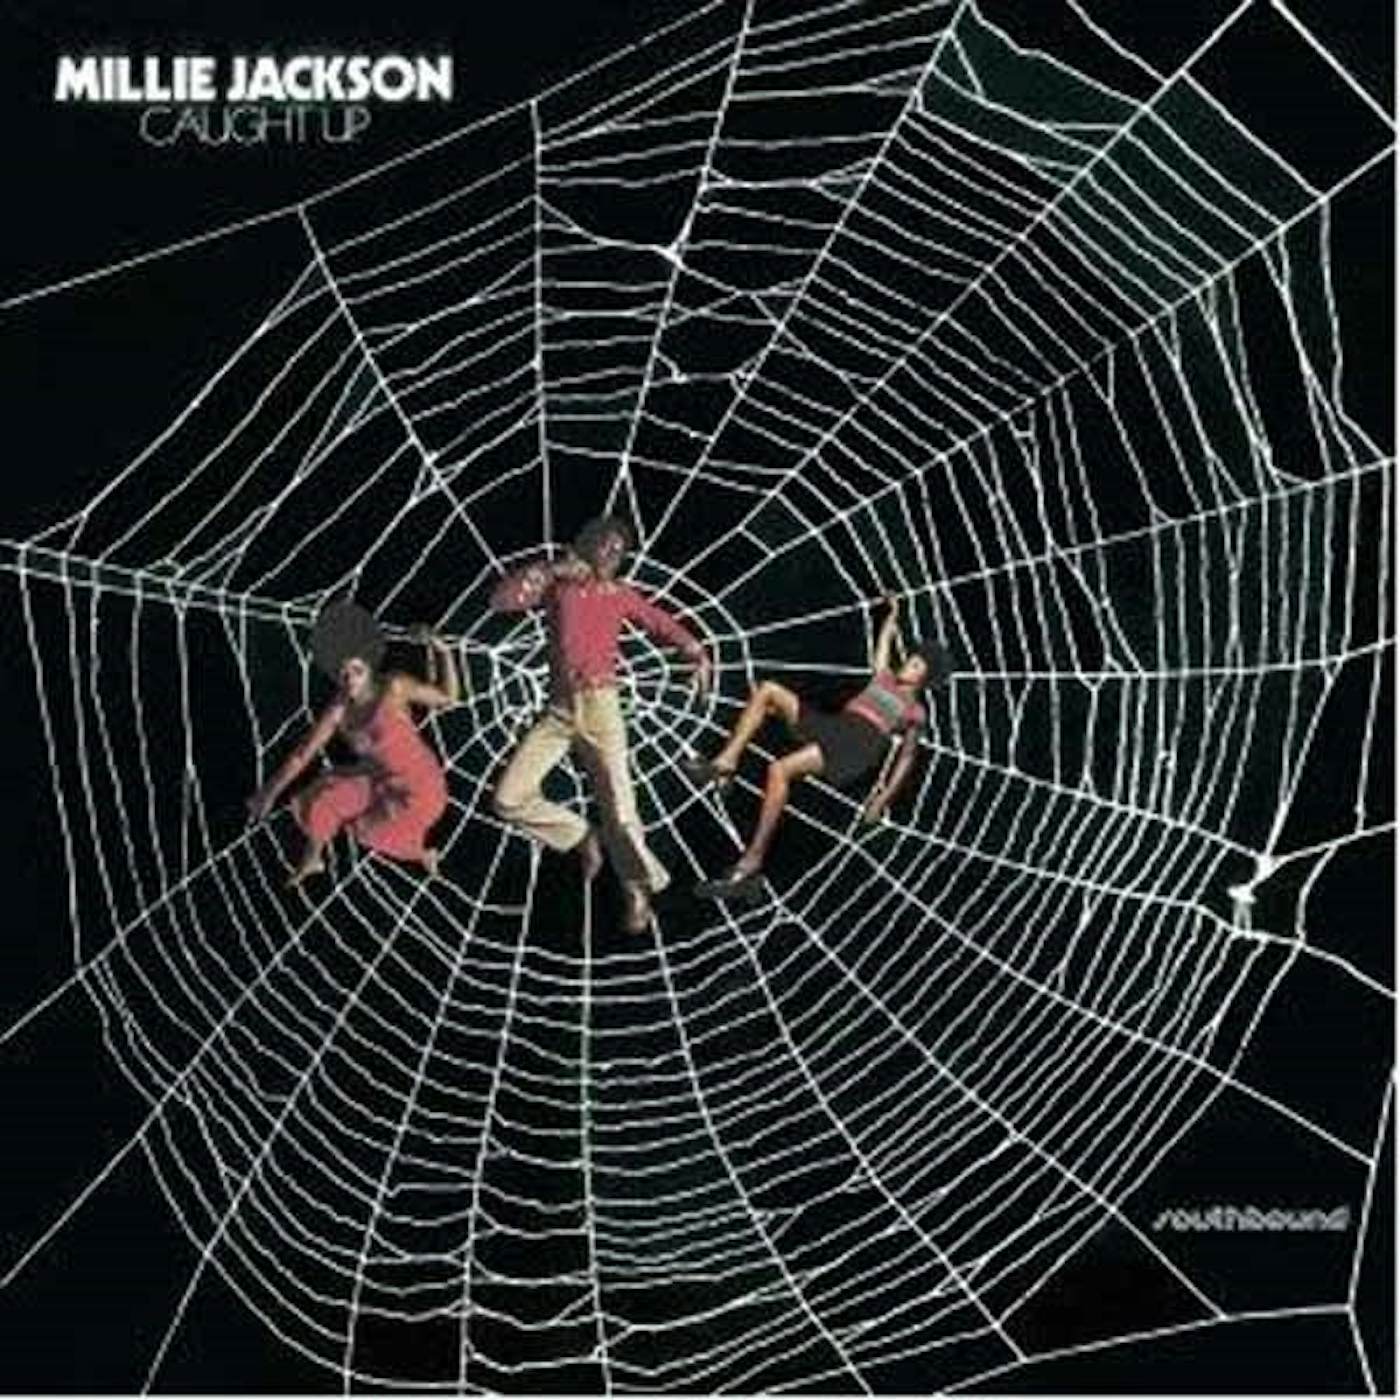 Millie Jackson LP - Caught Up (Vinyl)